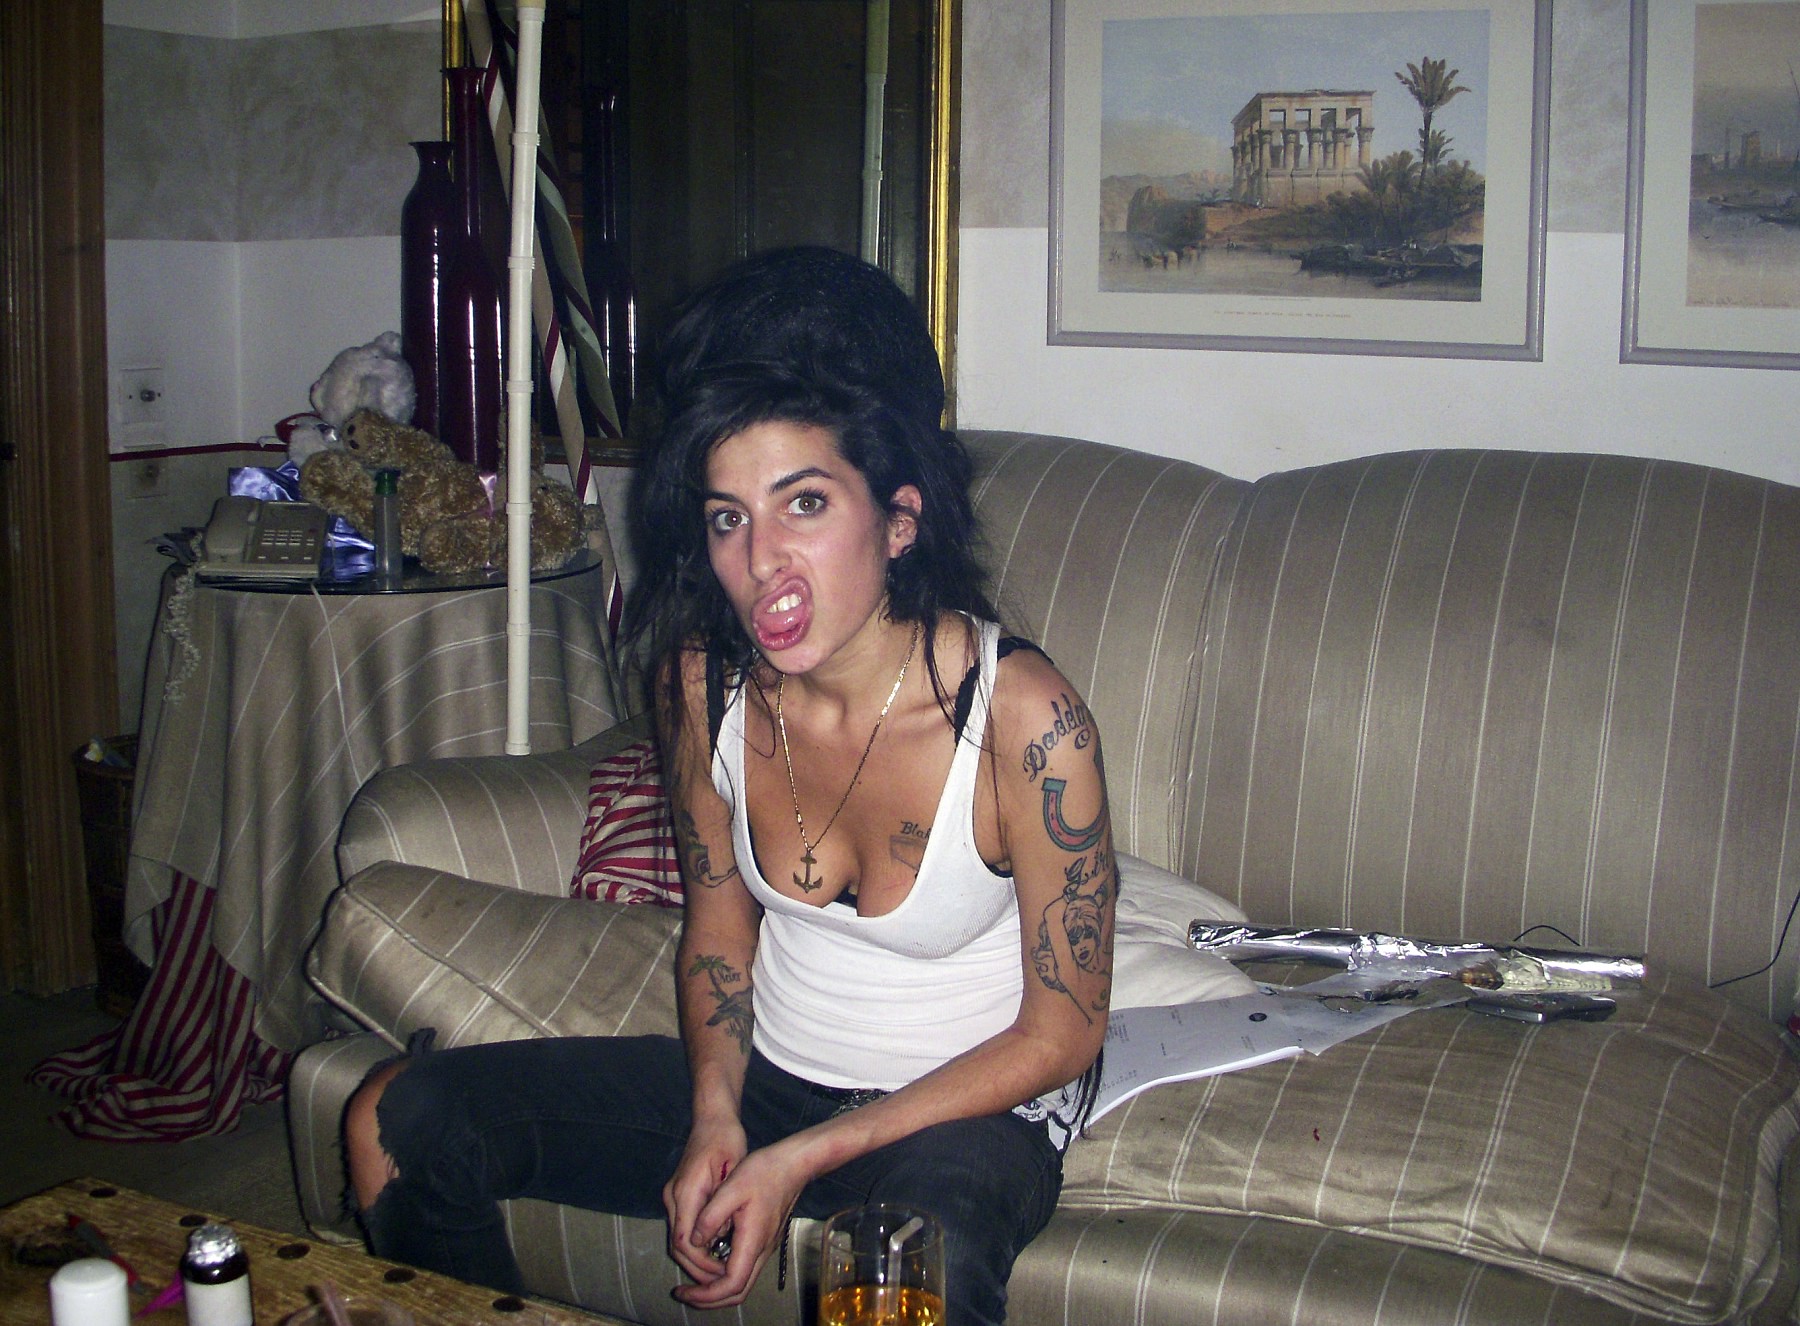 http://codyrapol.com/~Dexter/Amy-Winehouse-found-dead.jpg